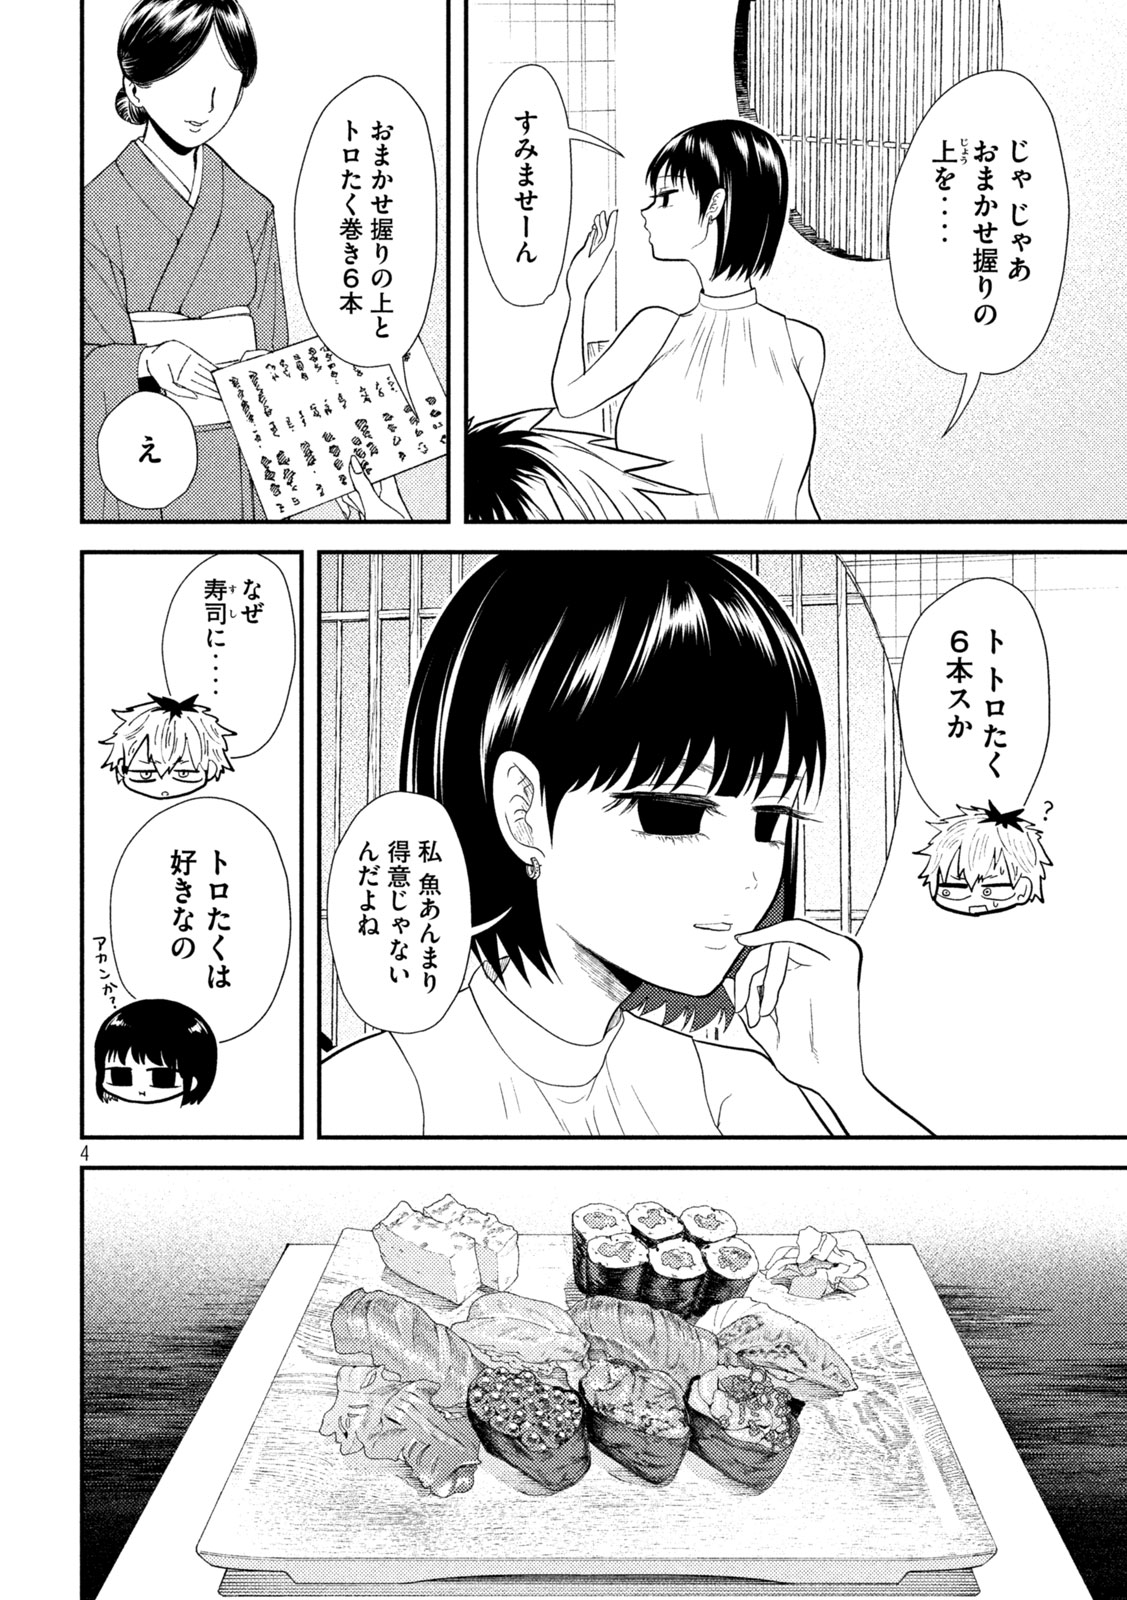 Heisei Haizanhei Sumire-chan - Chapter 17 - Page 4